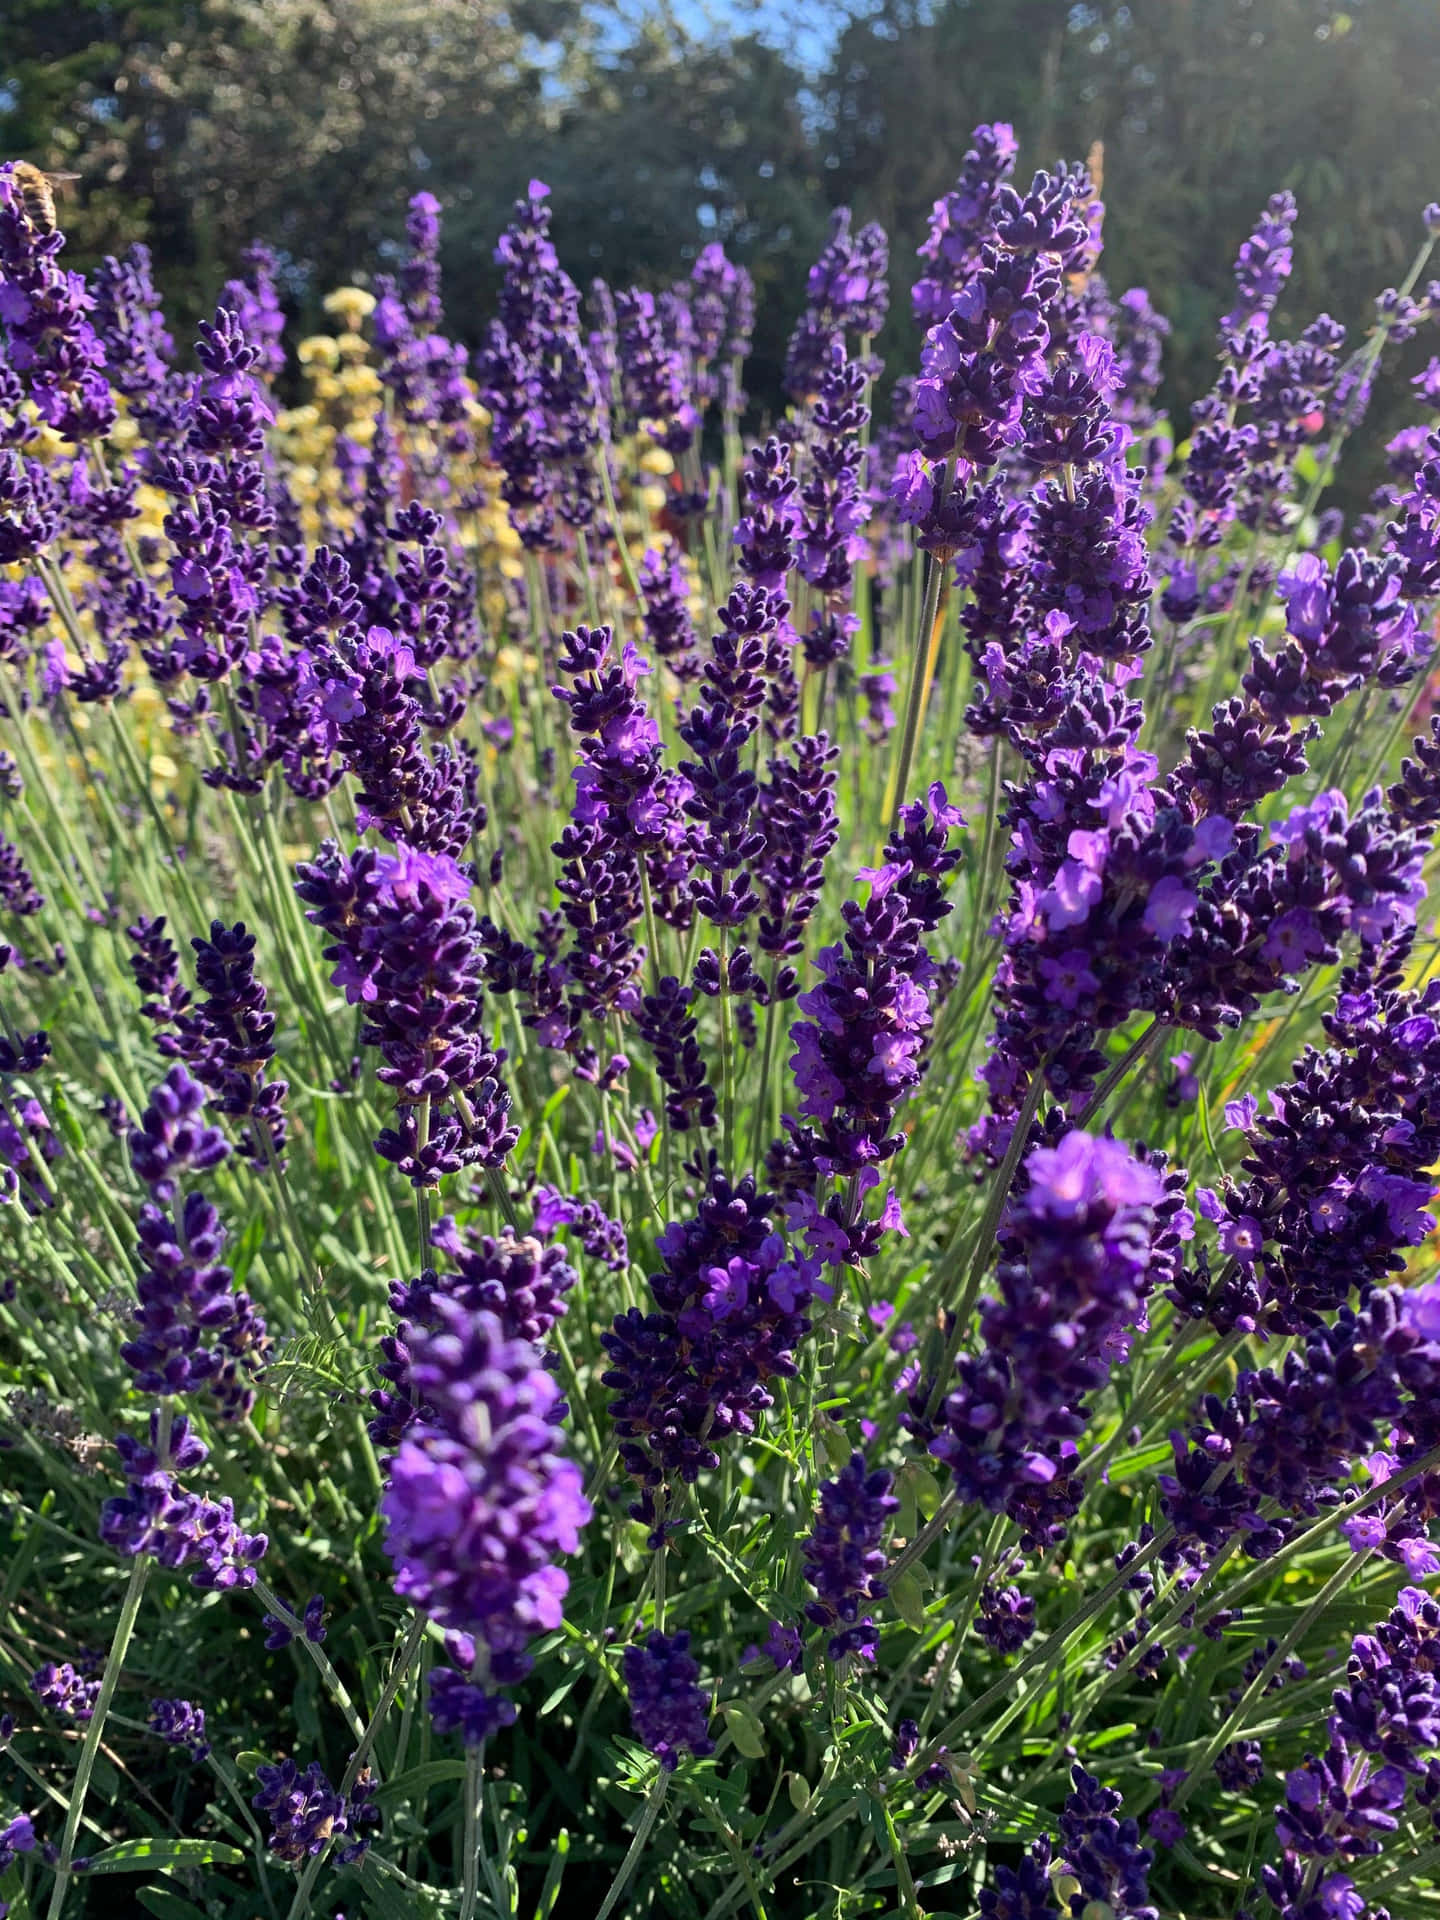 Serene Landscape Of Vibrant Lavender Field